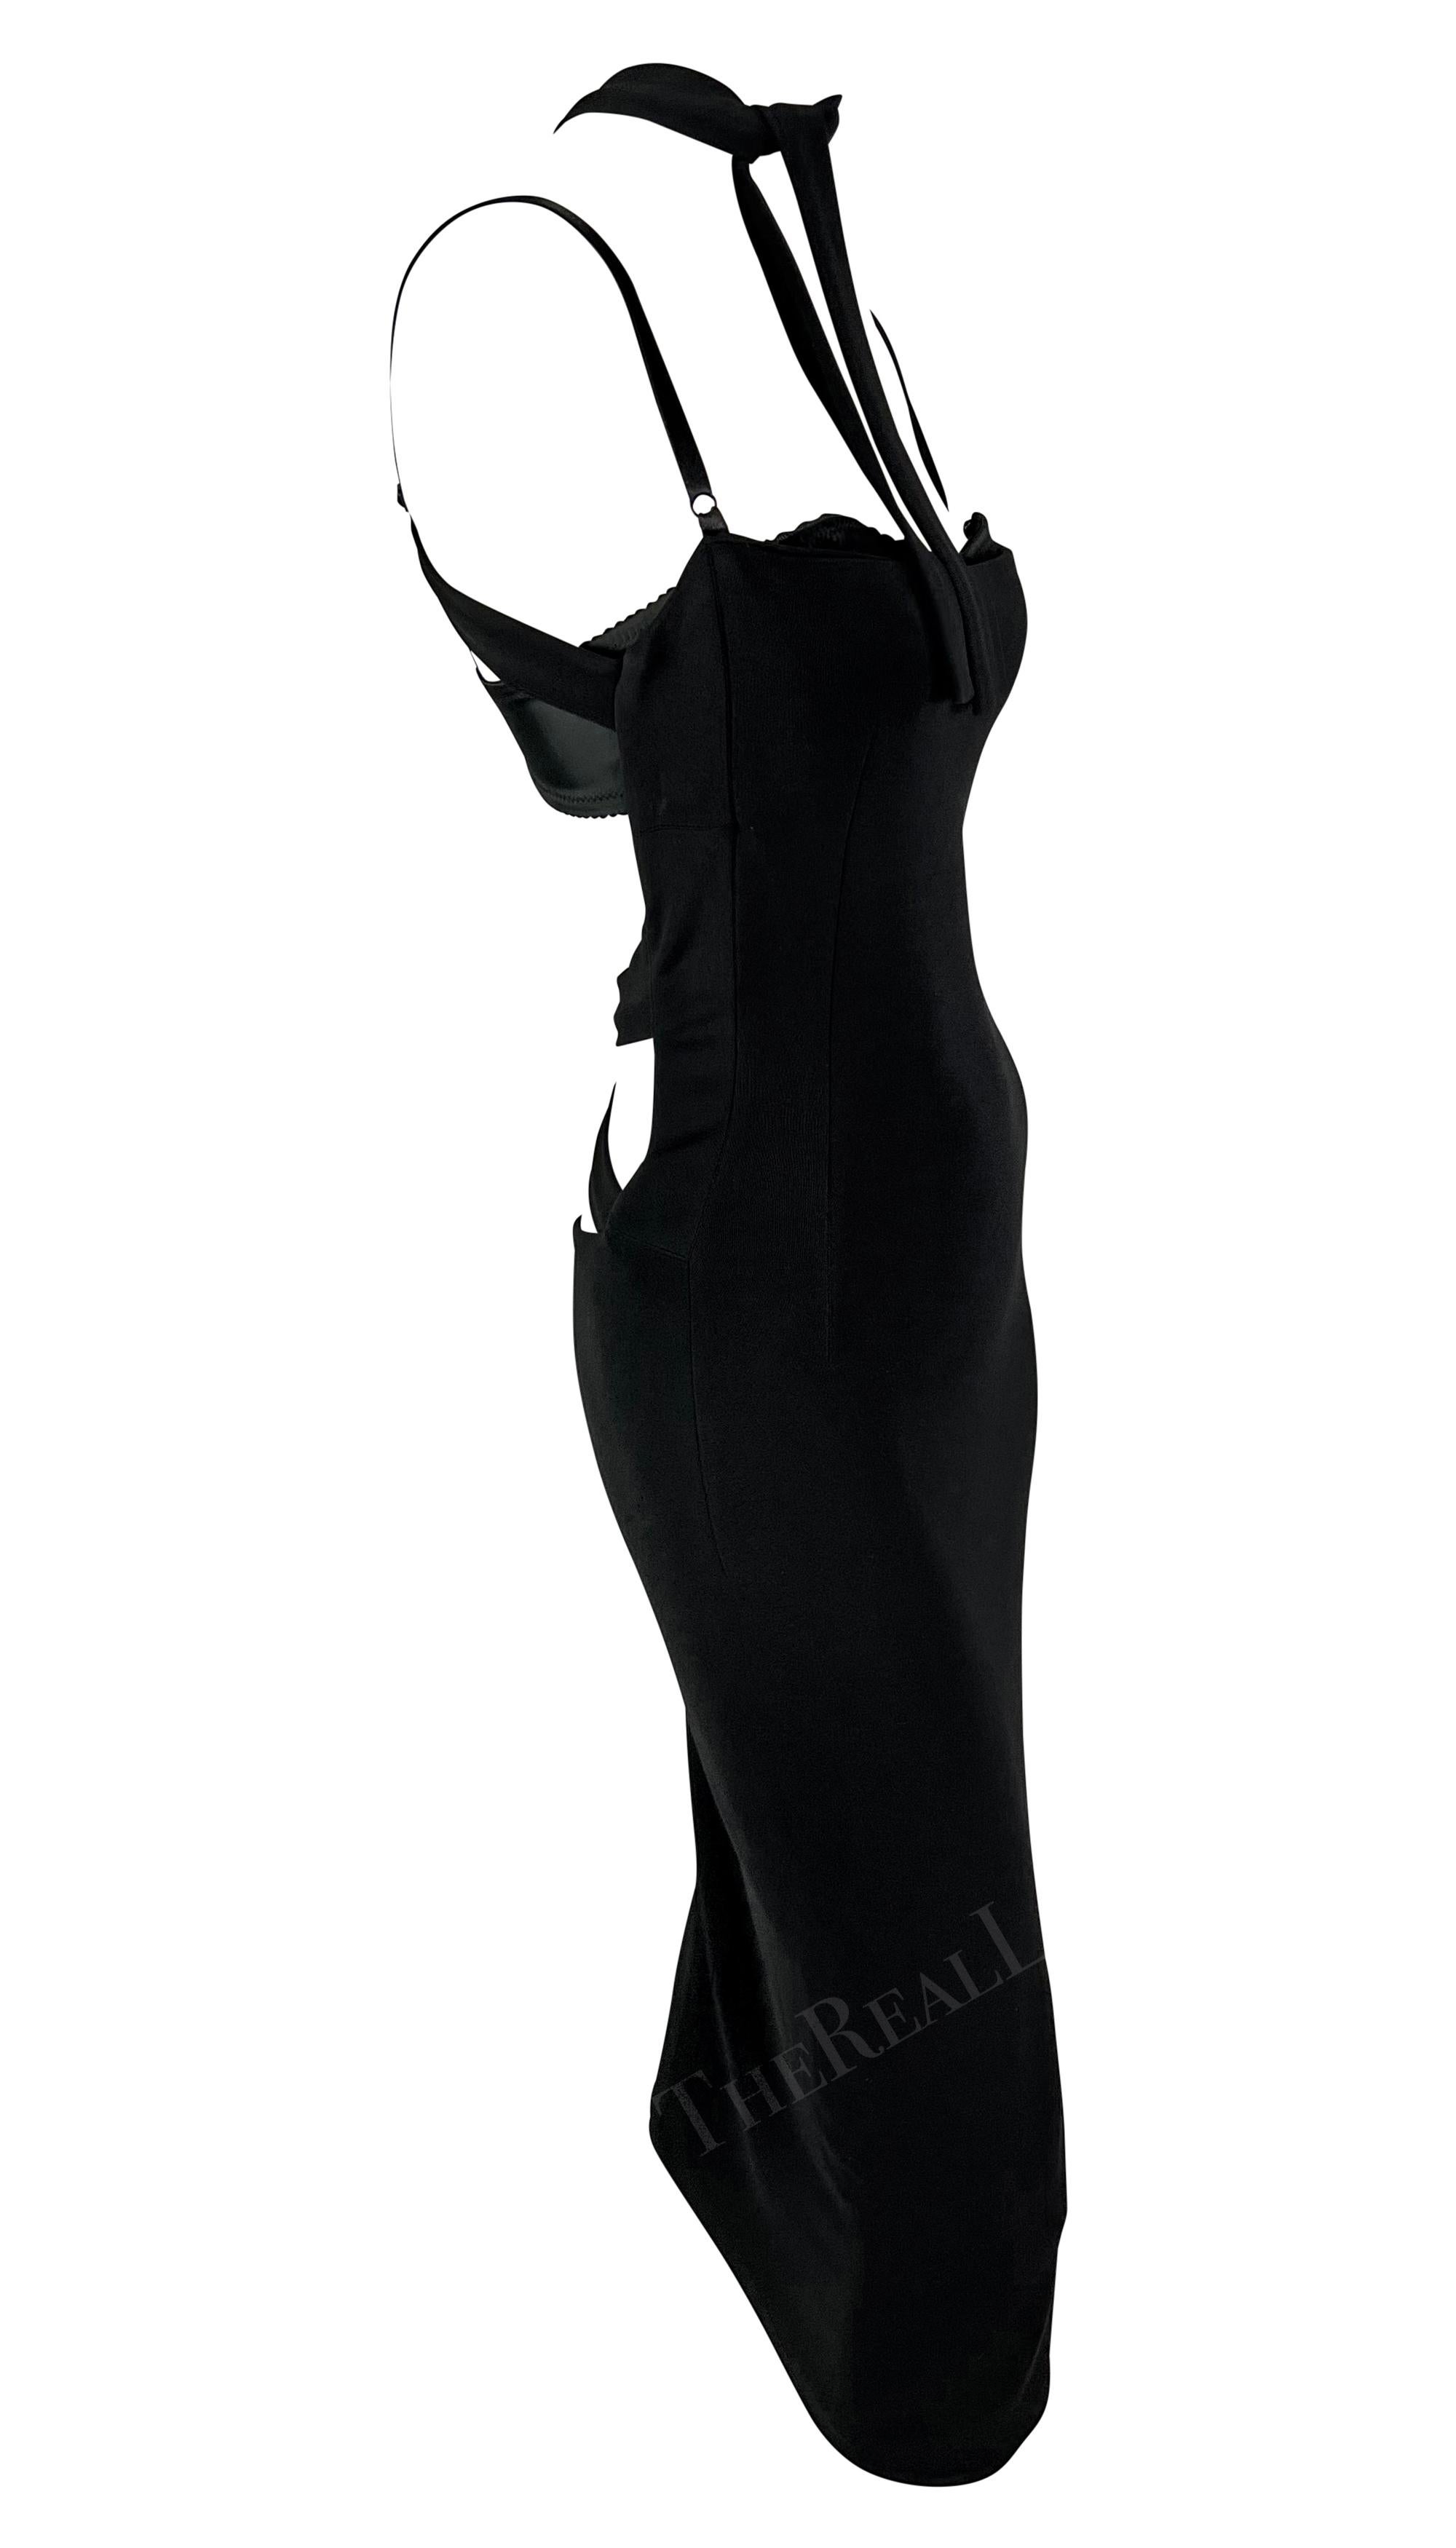 S/S 2001 Dolce & Gabbana Black Bodycon Strap Backless Runway Dress For Sale 1